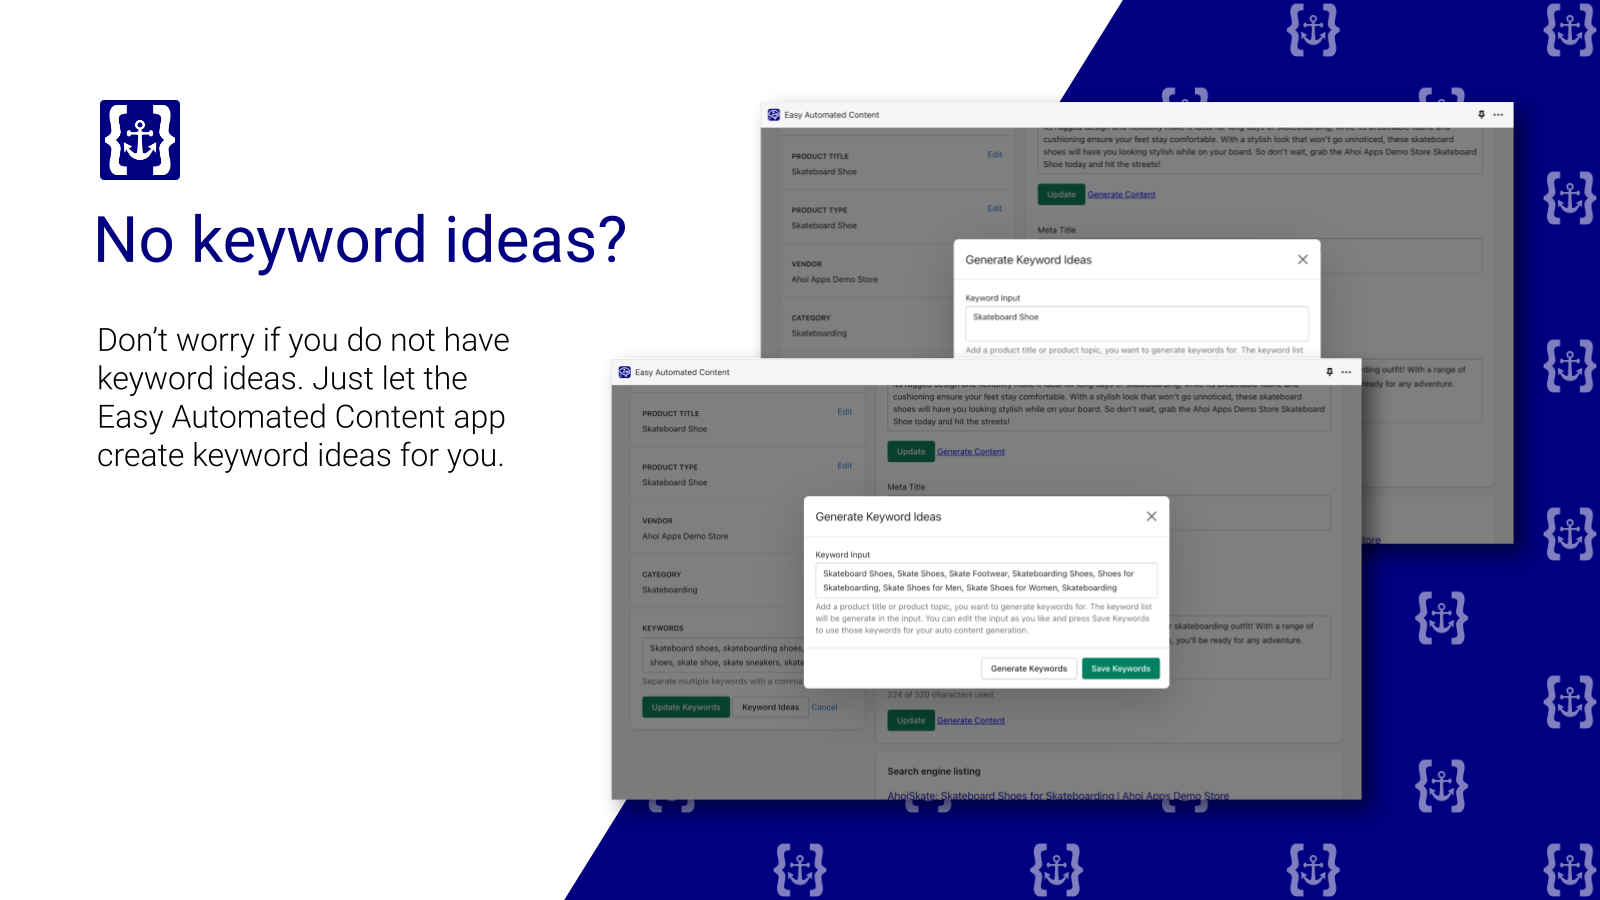 Generate keywords ideas automatically.